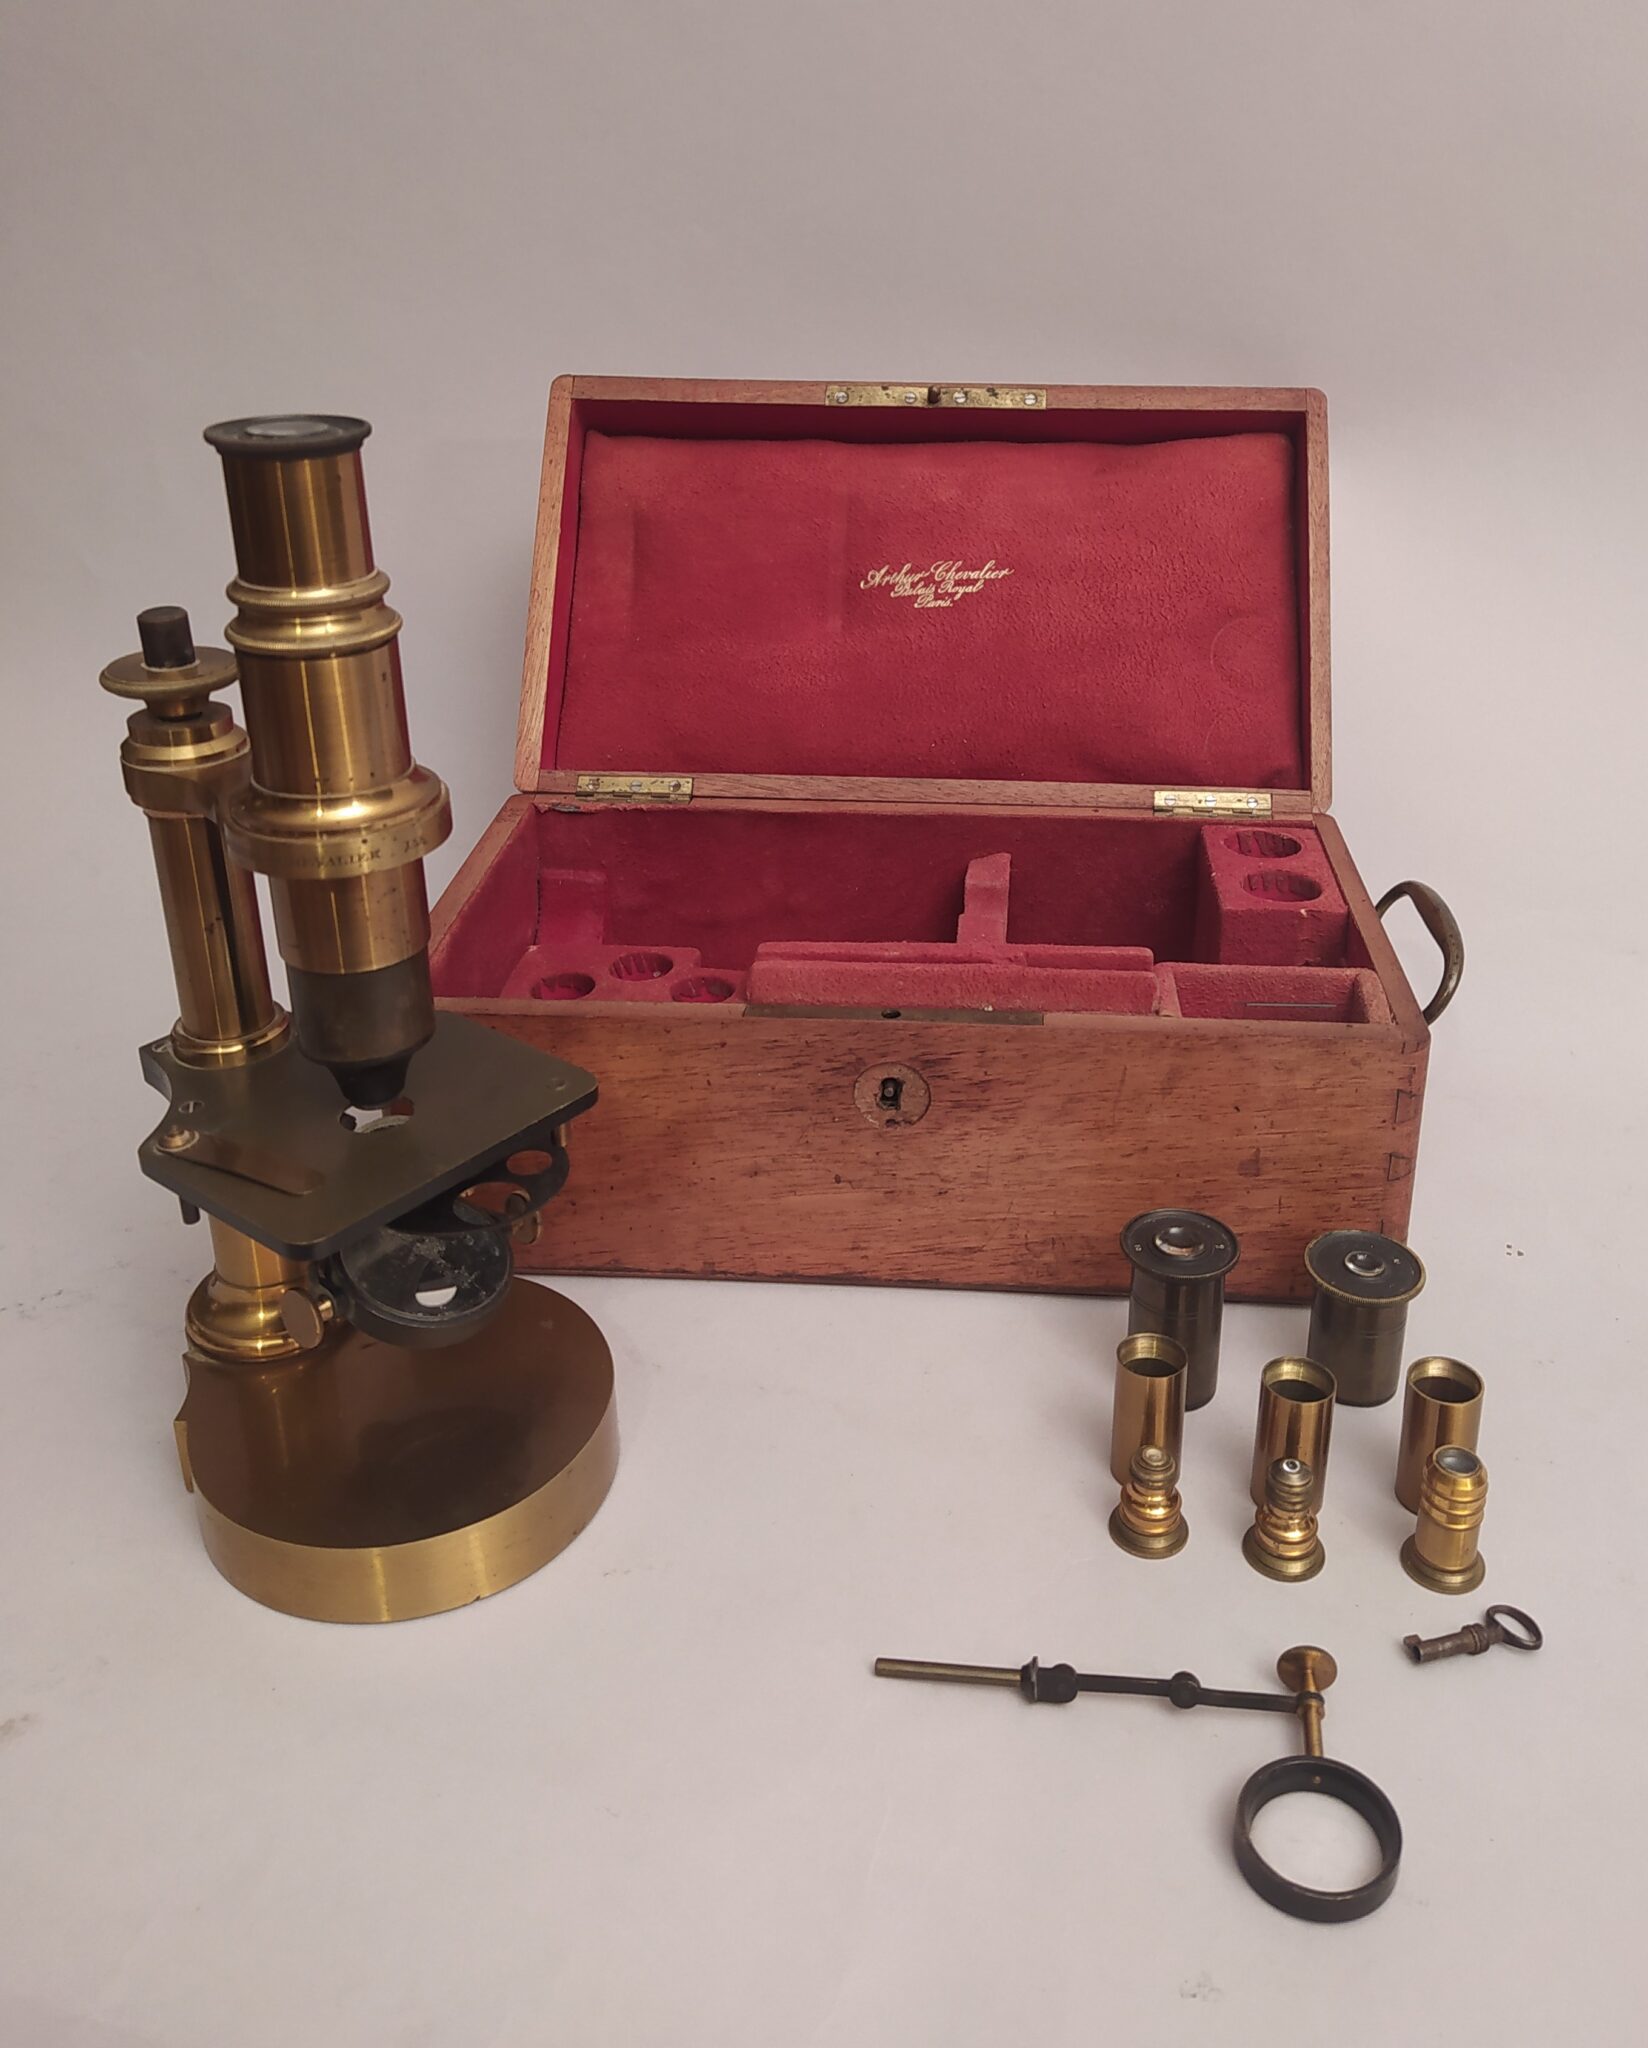 Mid-size microscope signed “Dr. Arthur Chevalier, 158 Palais Royal”, 1870-1874